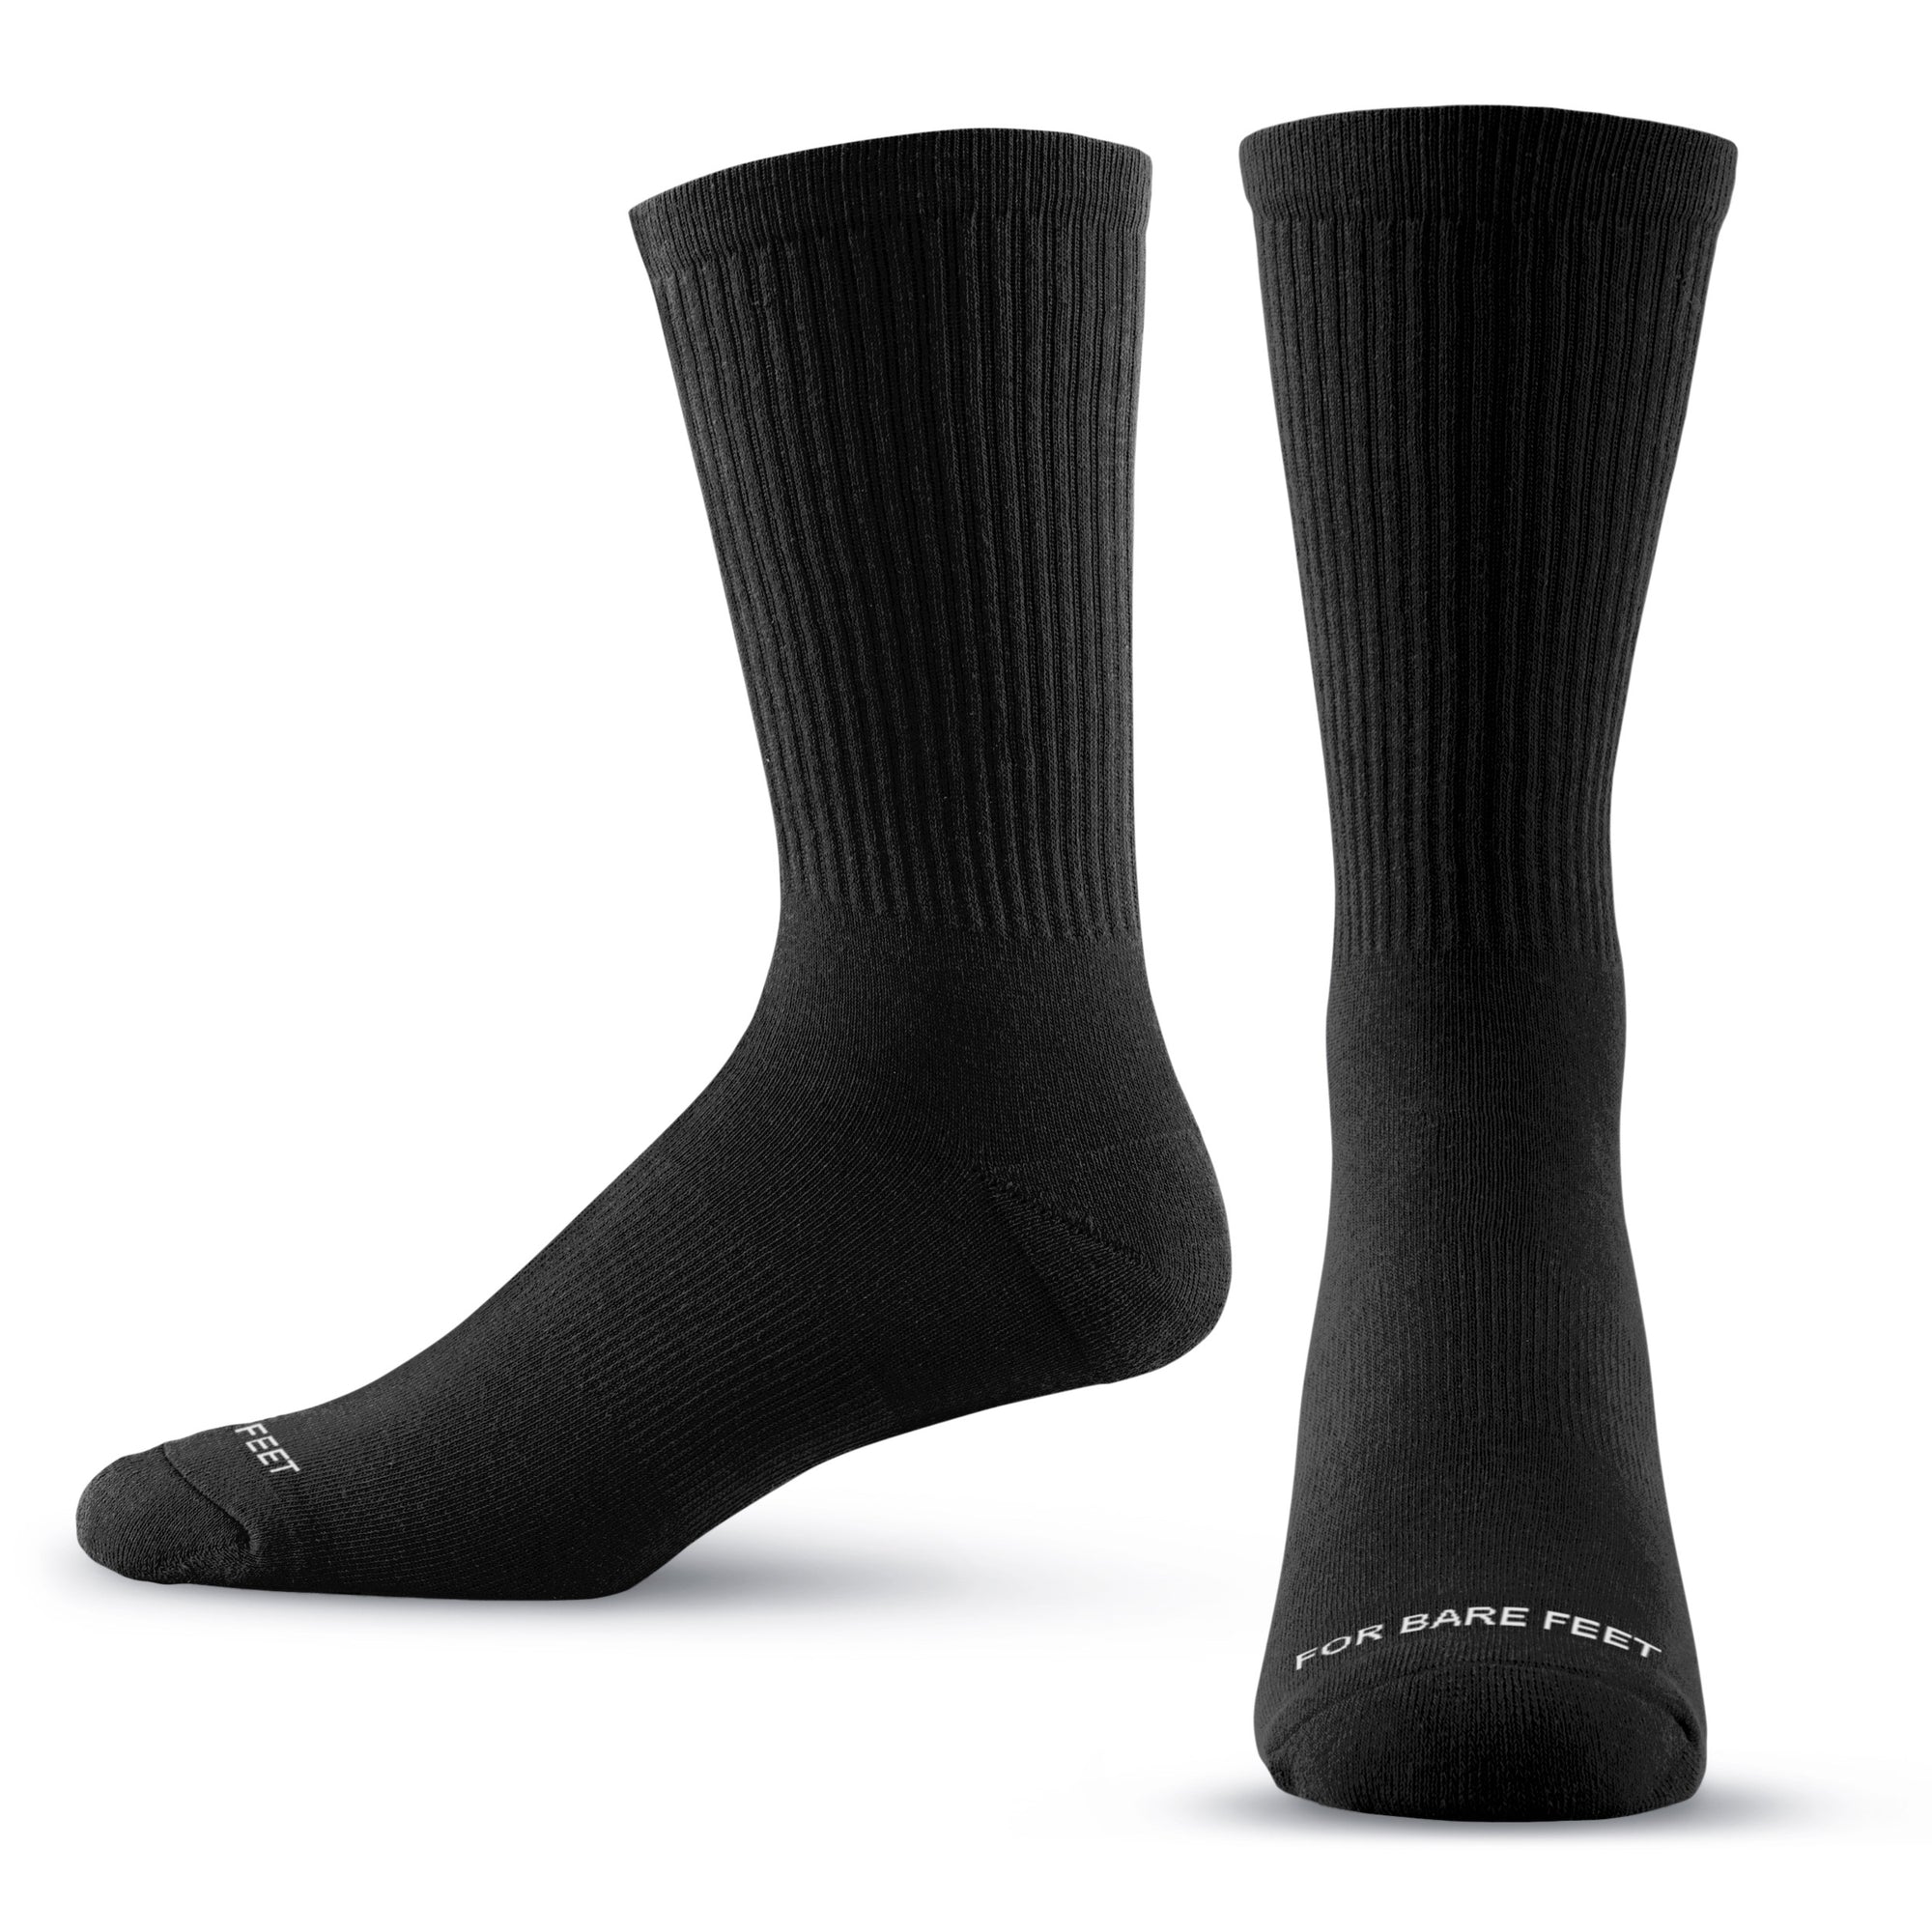 Premium Crew Socks 3 Pack - Navy/Black/Charcoal